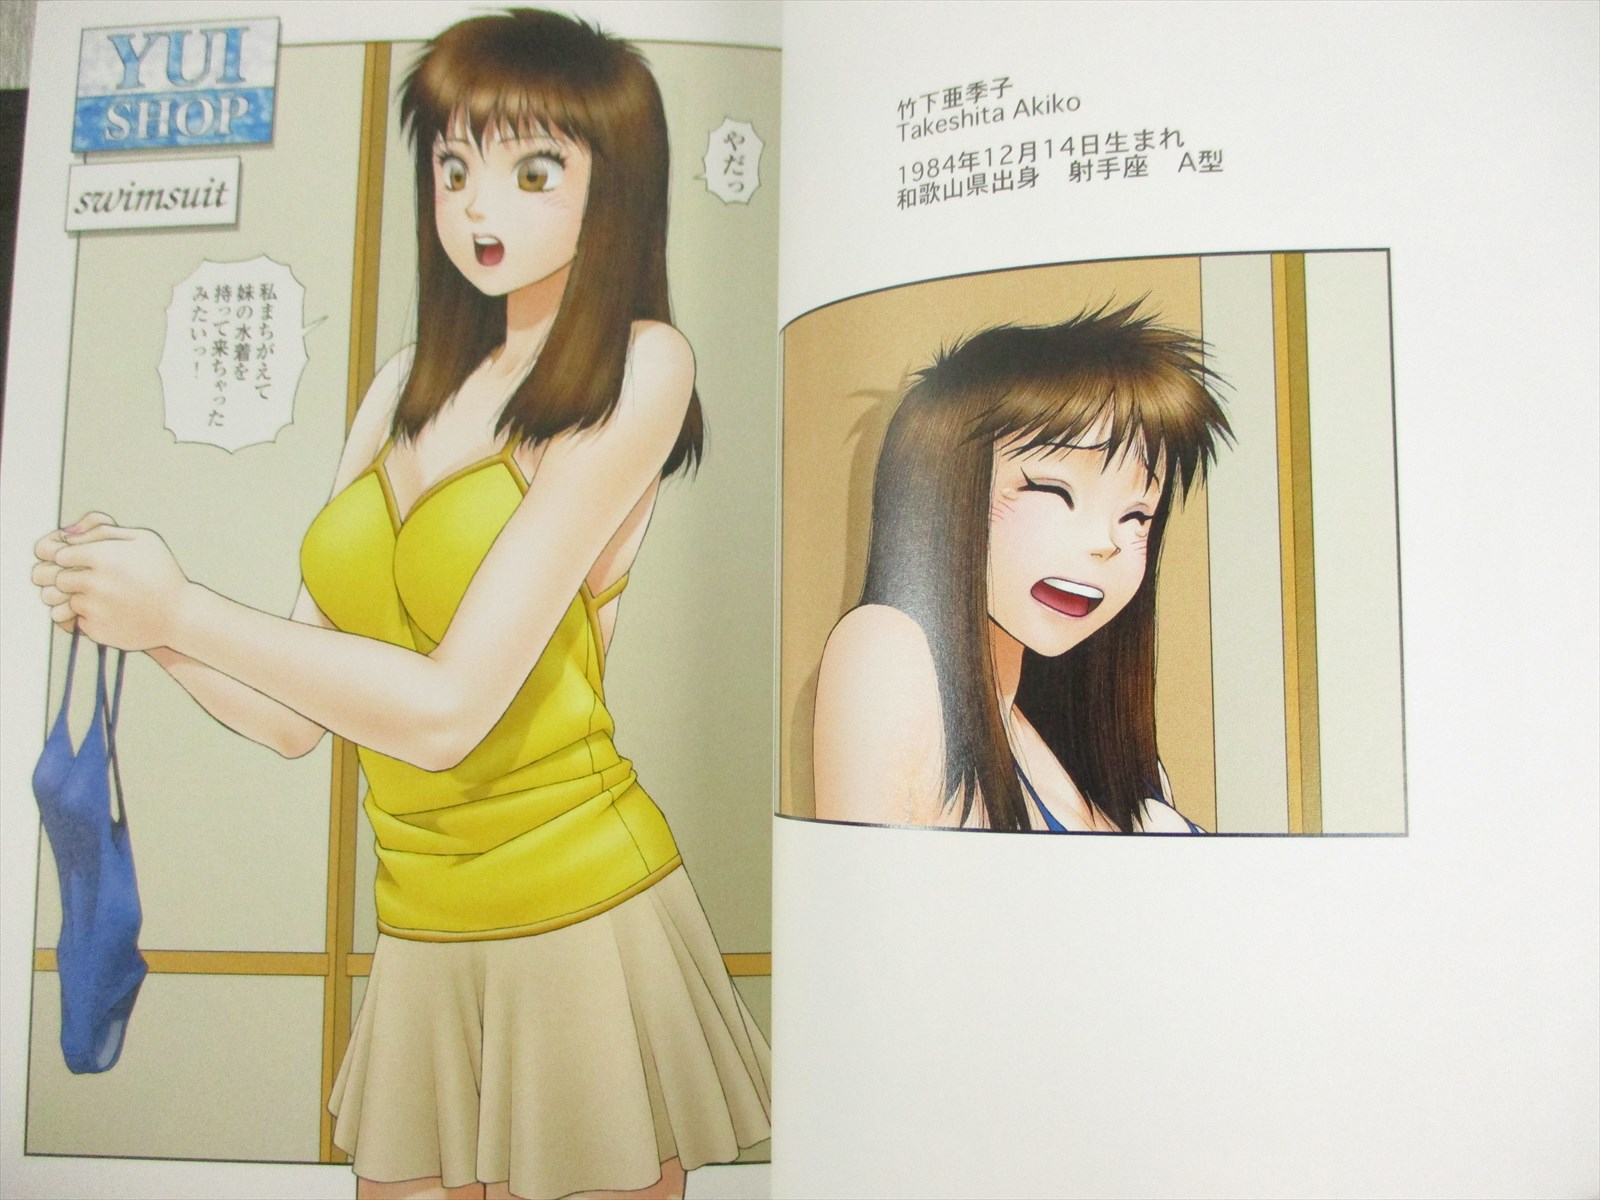 YUI SHOP MINI KURO Black Art Toshiki Illustration Book Fanbook KO24* | eBay